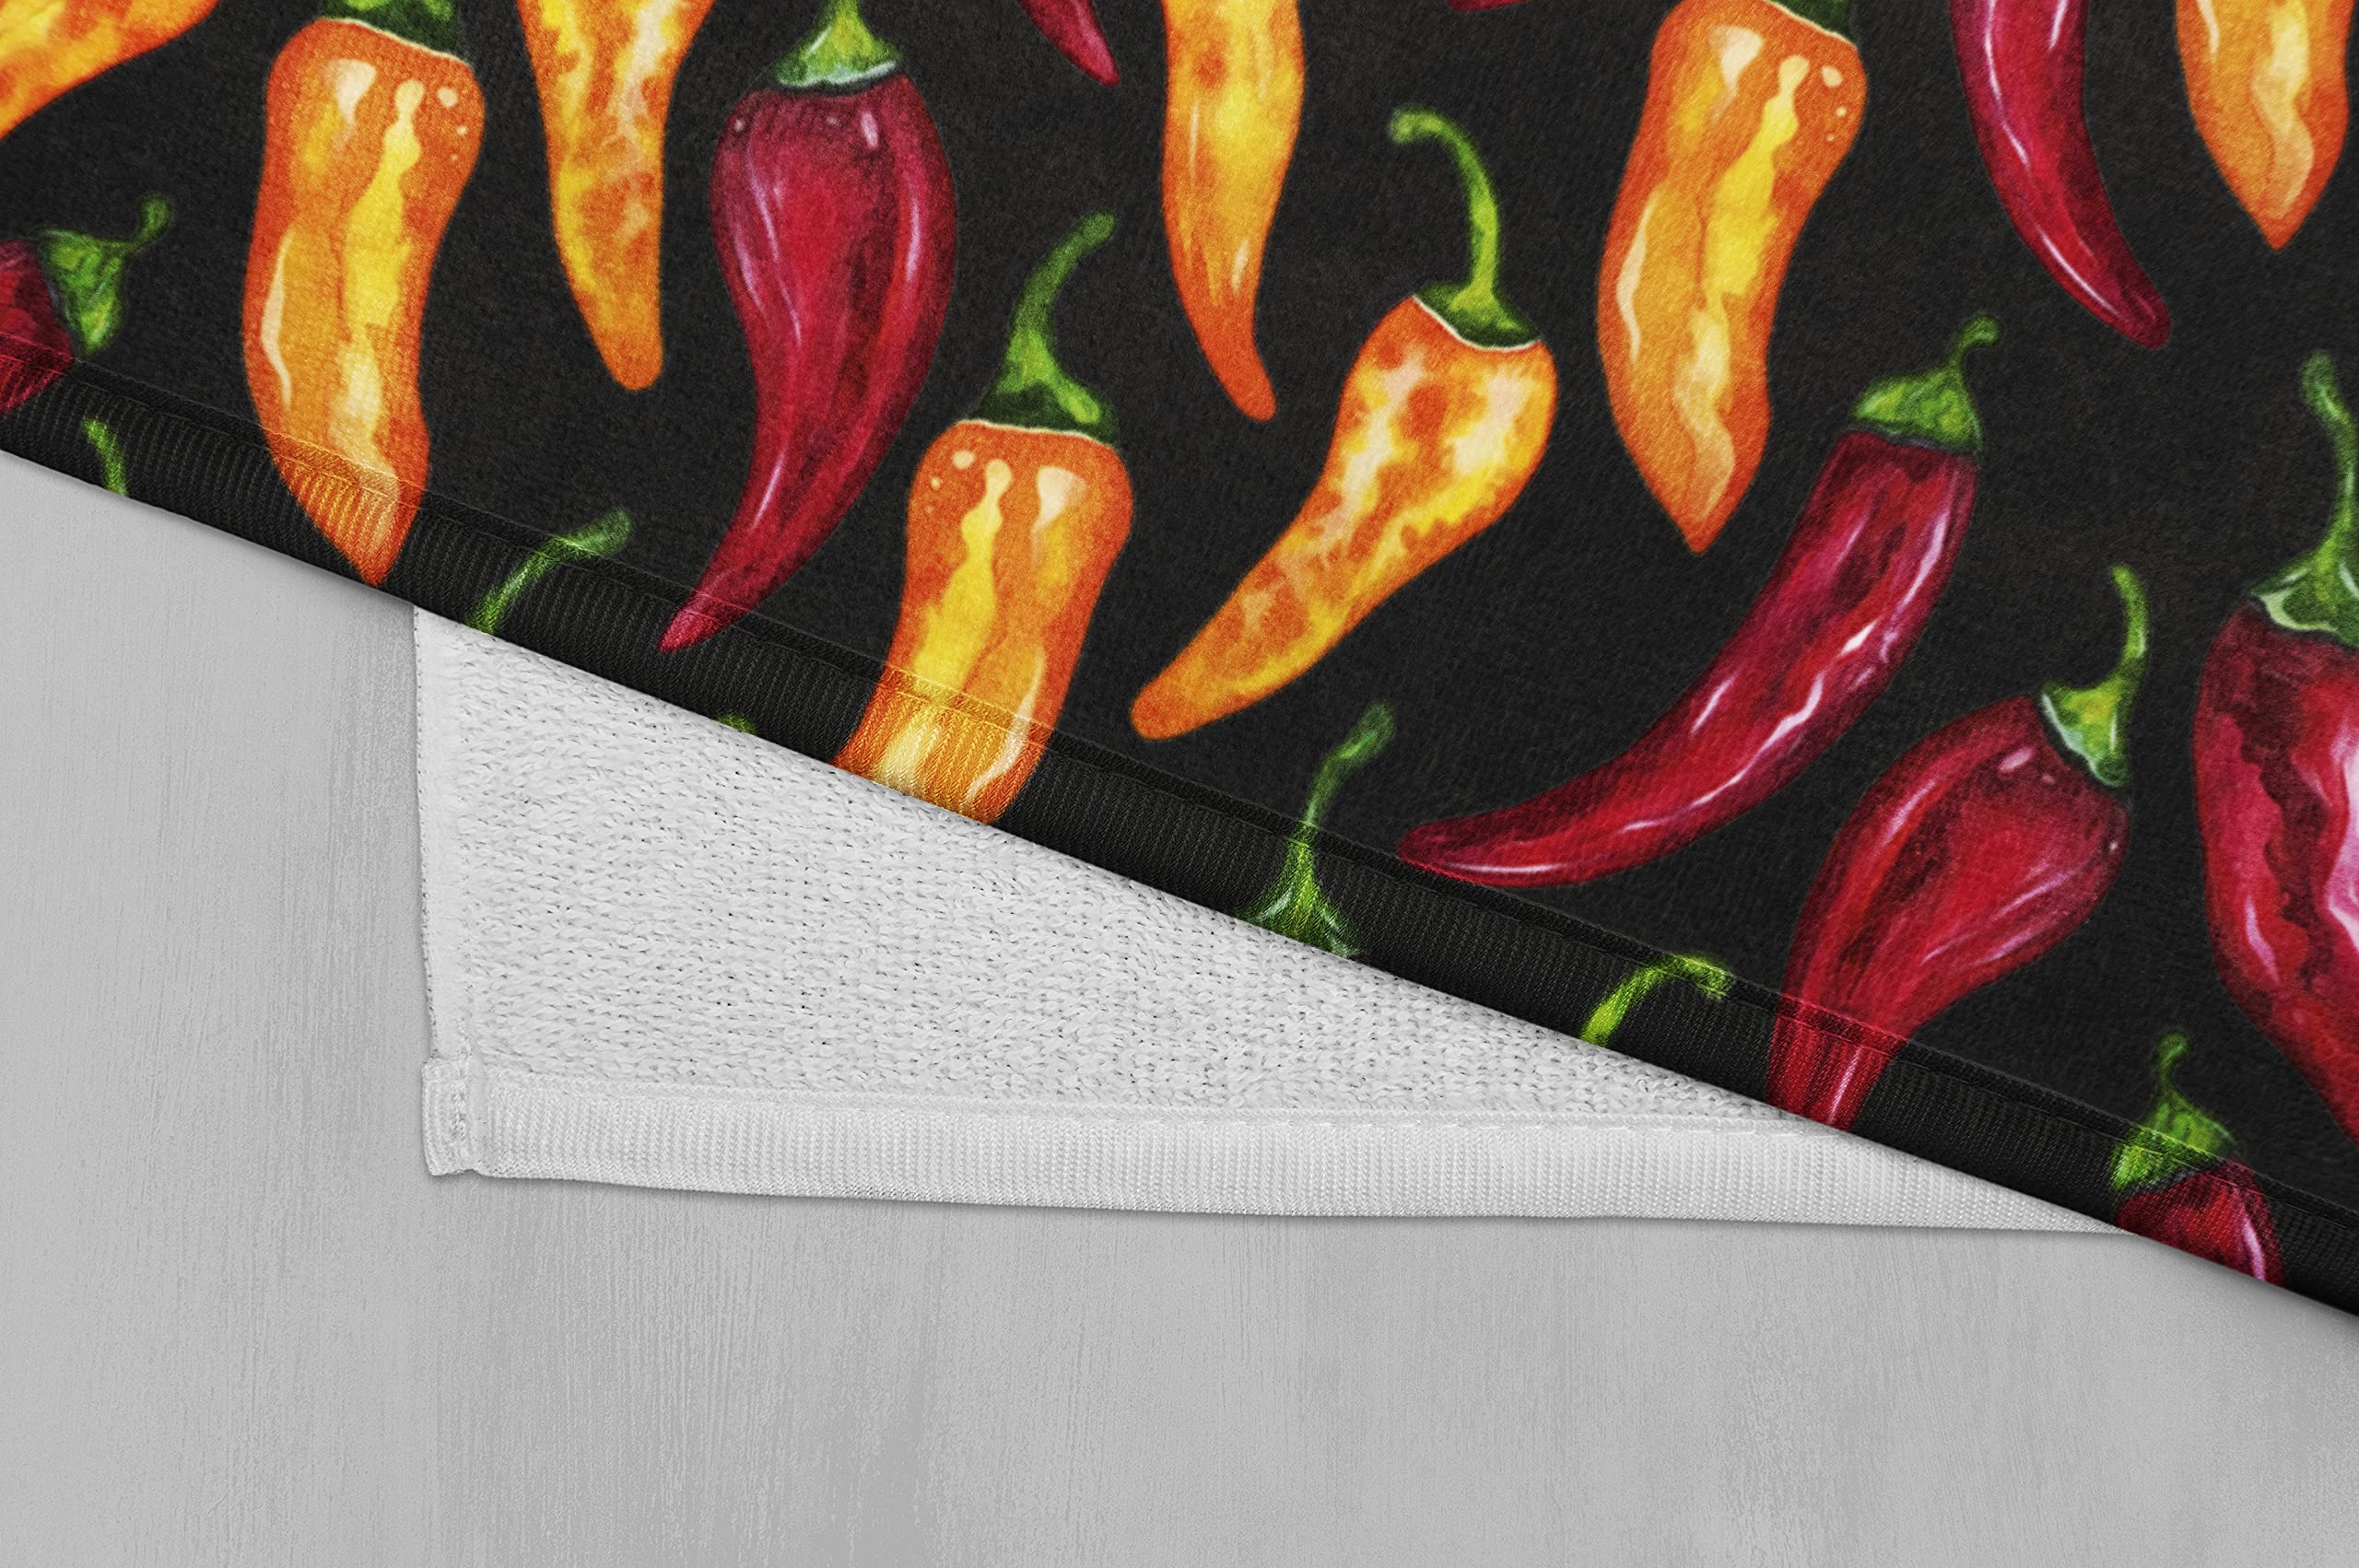 Chili Pepper Print Hand Towel - Kitchen Towel - Bathroom Hand Towel - Cotton Terry Cloth - 15"x25"